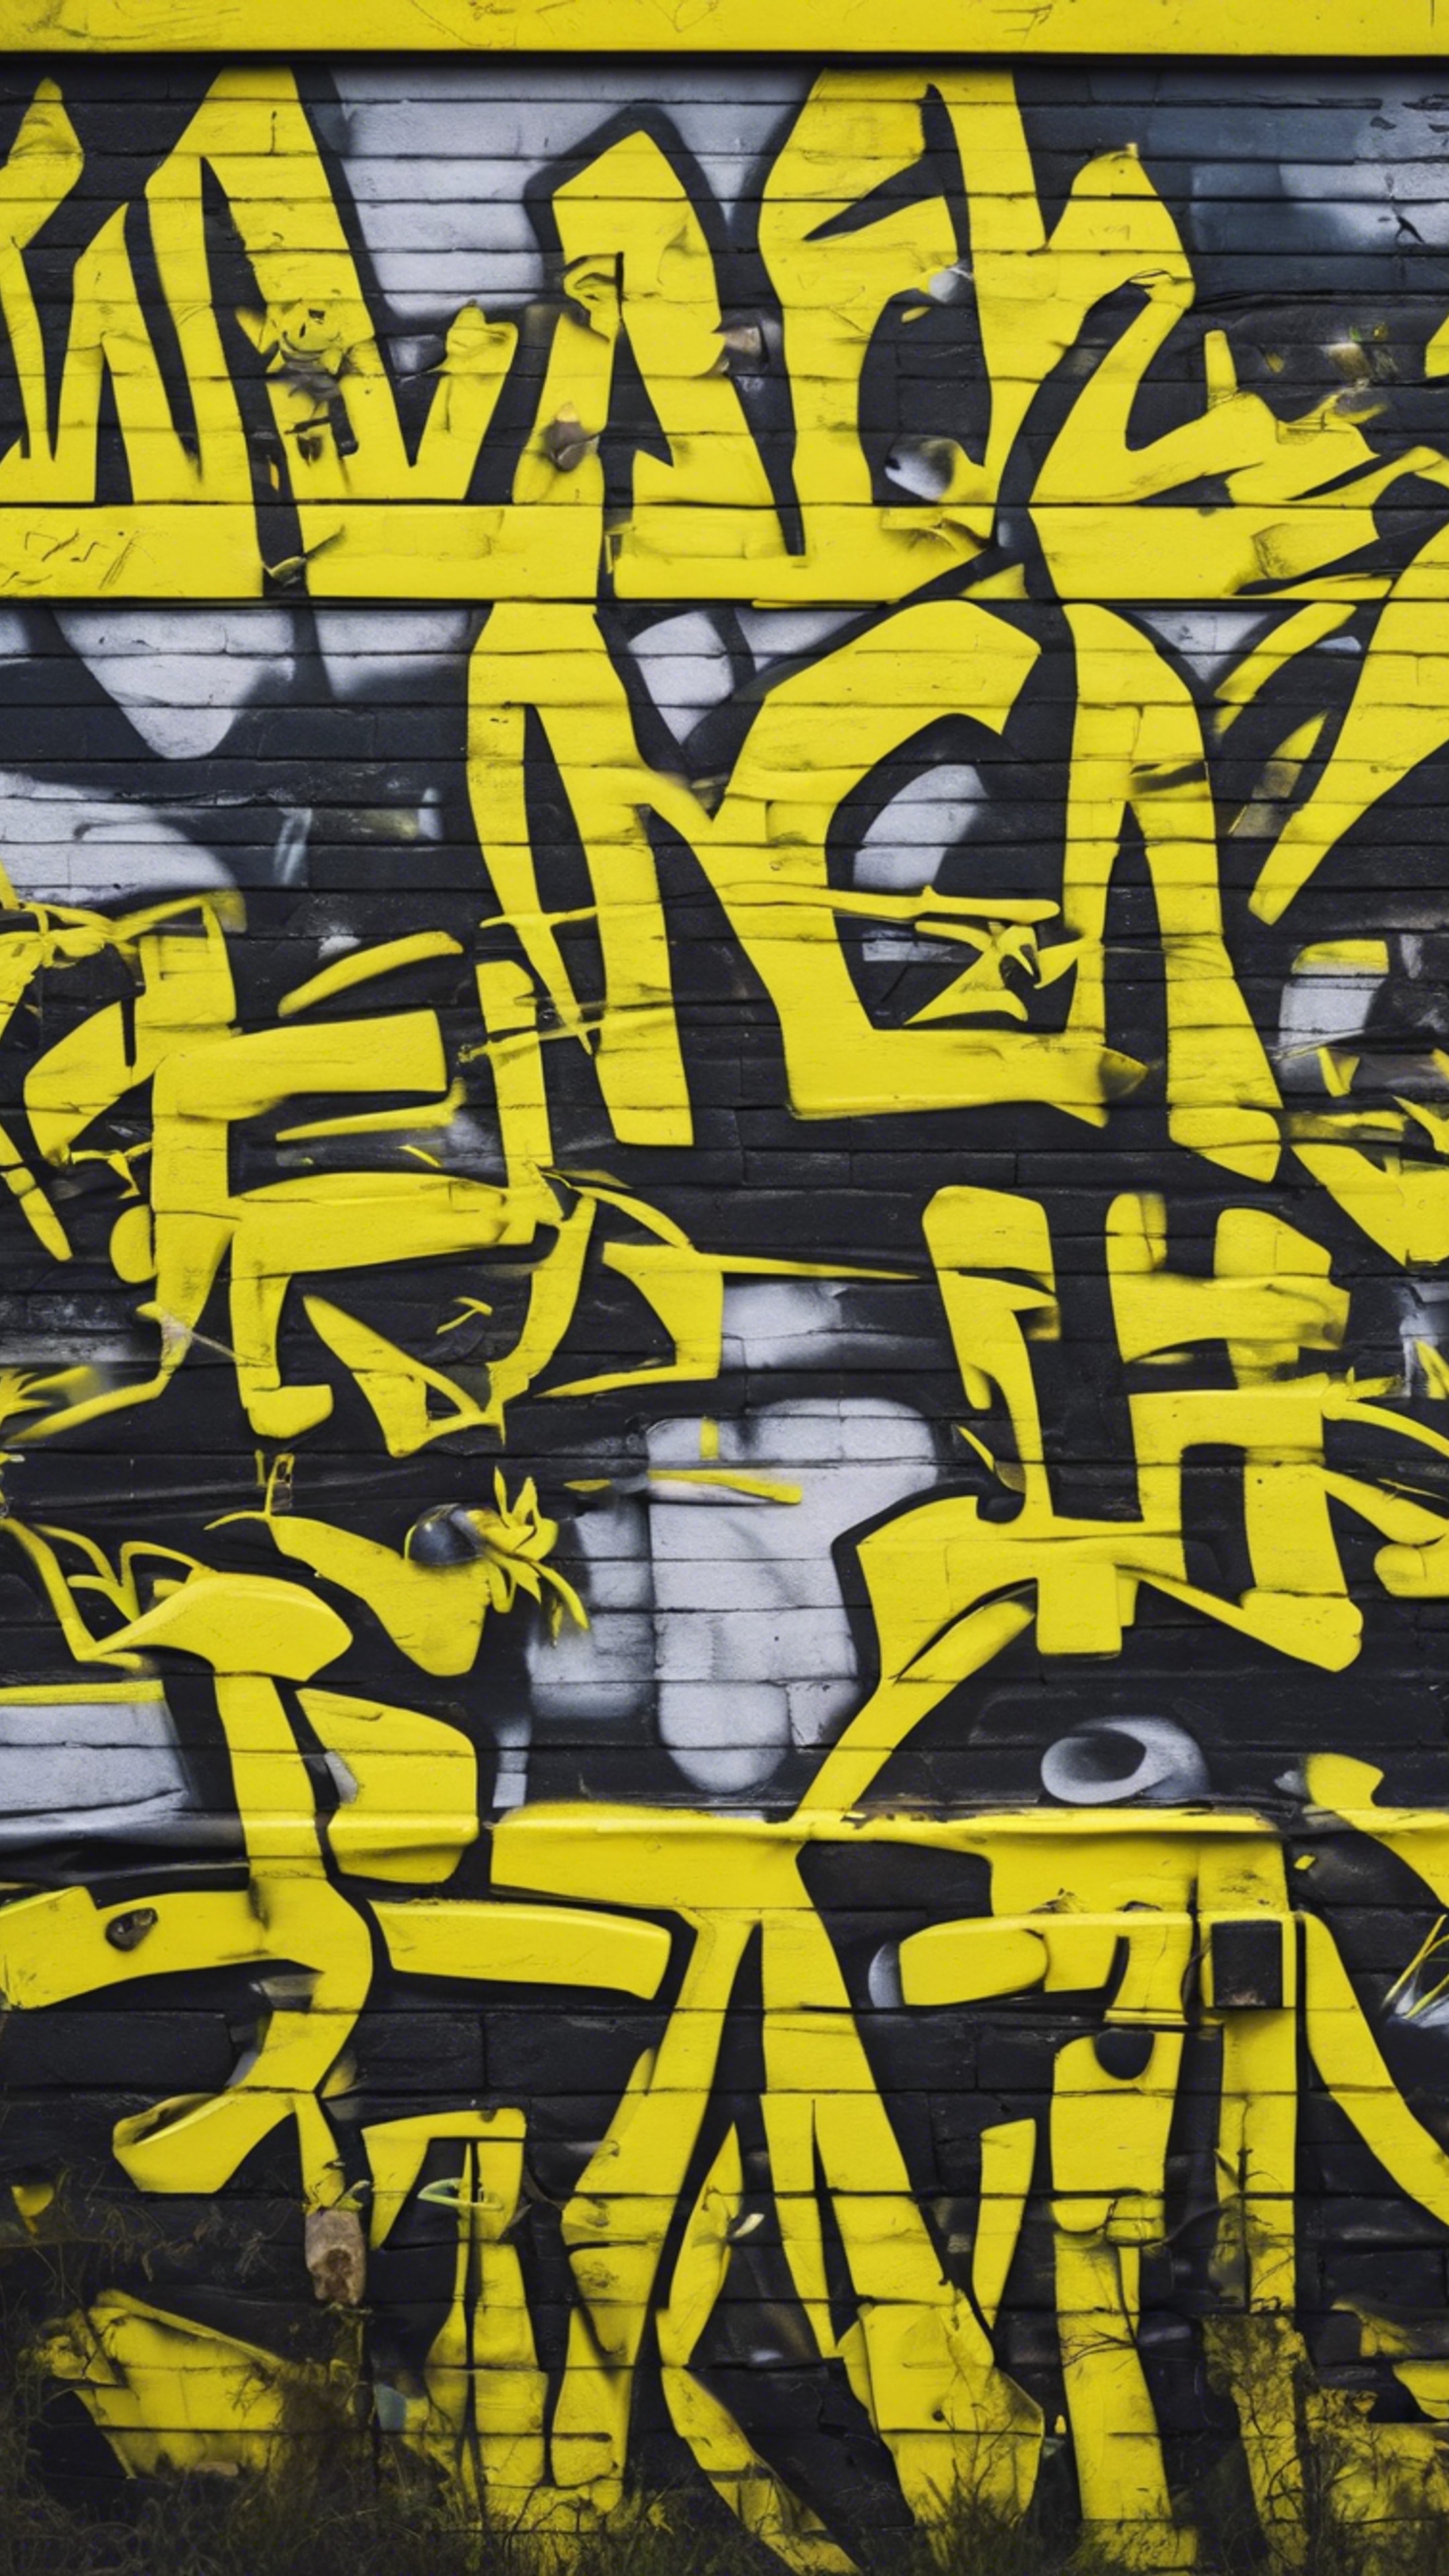 An urban graffiti wall consisting of wild neon yellow graphics. Hình nền[c33d158e57ea4e1b8c8e]